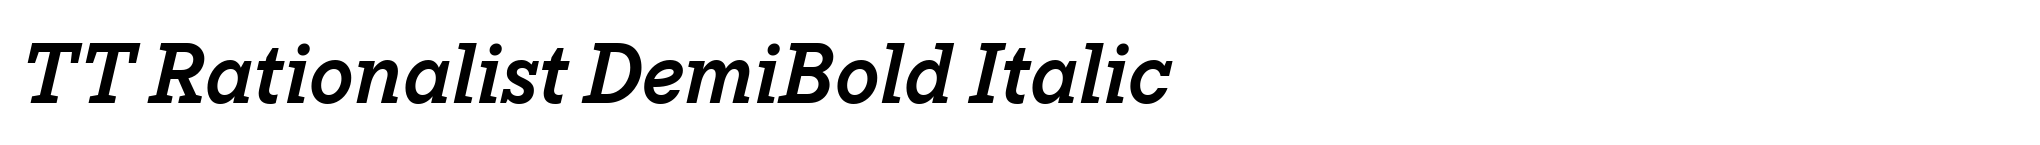 TT Rationalist DemiBold Italic image